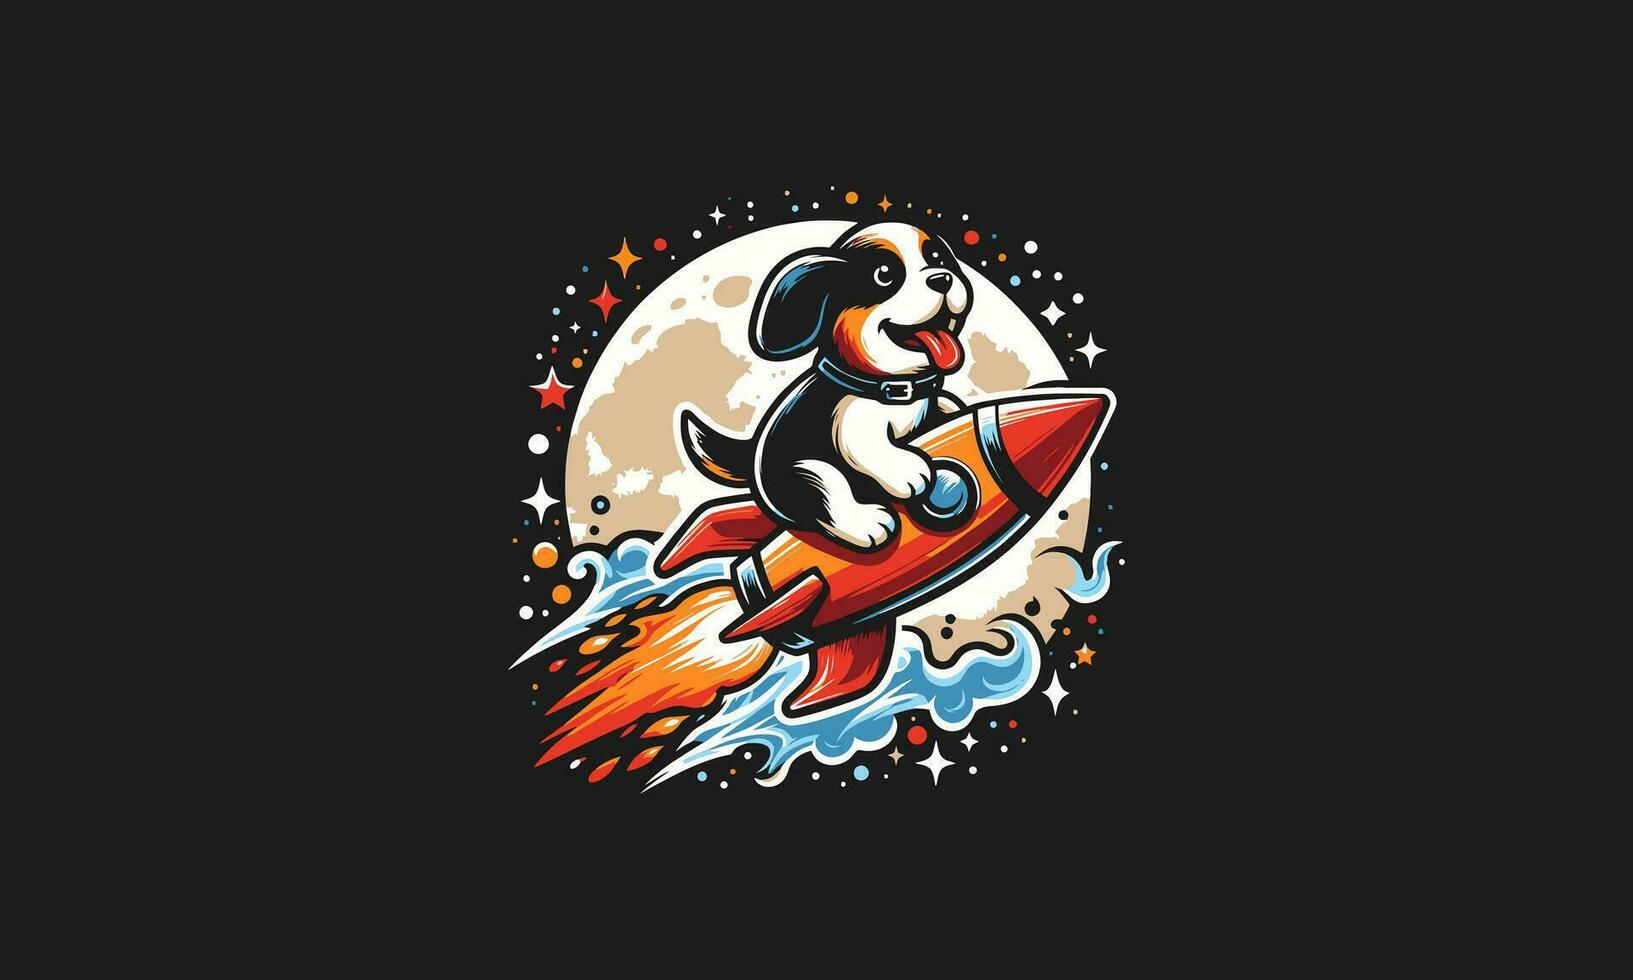 dog riding rocket vector illustration artwork design